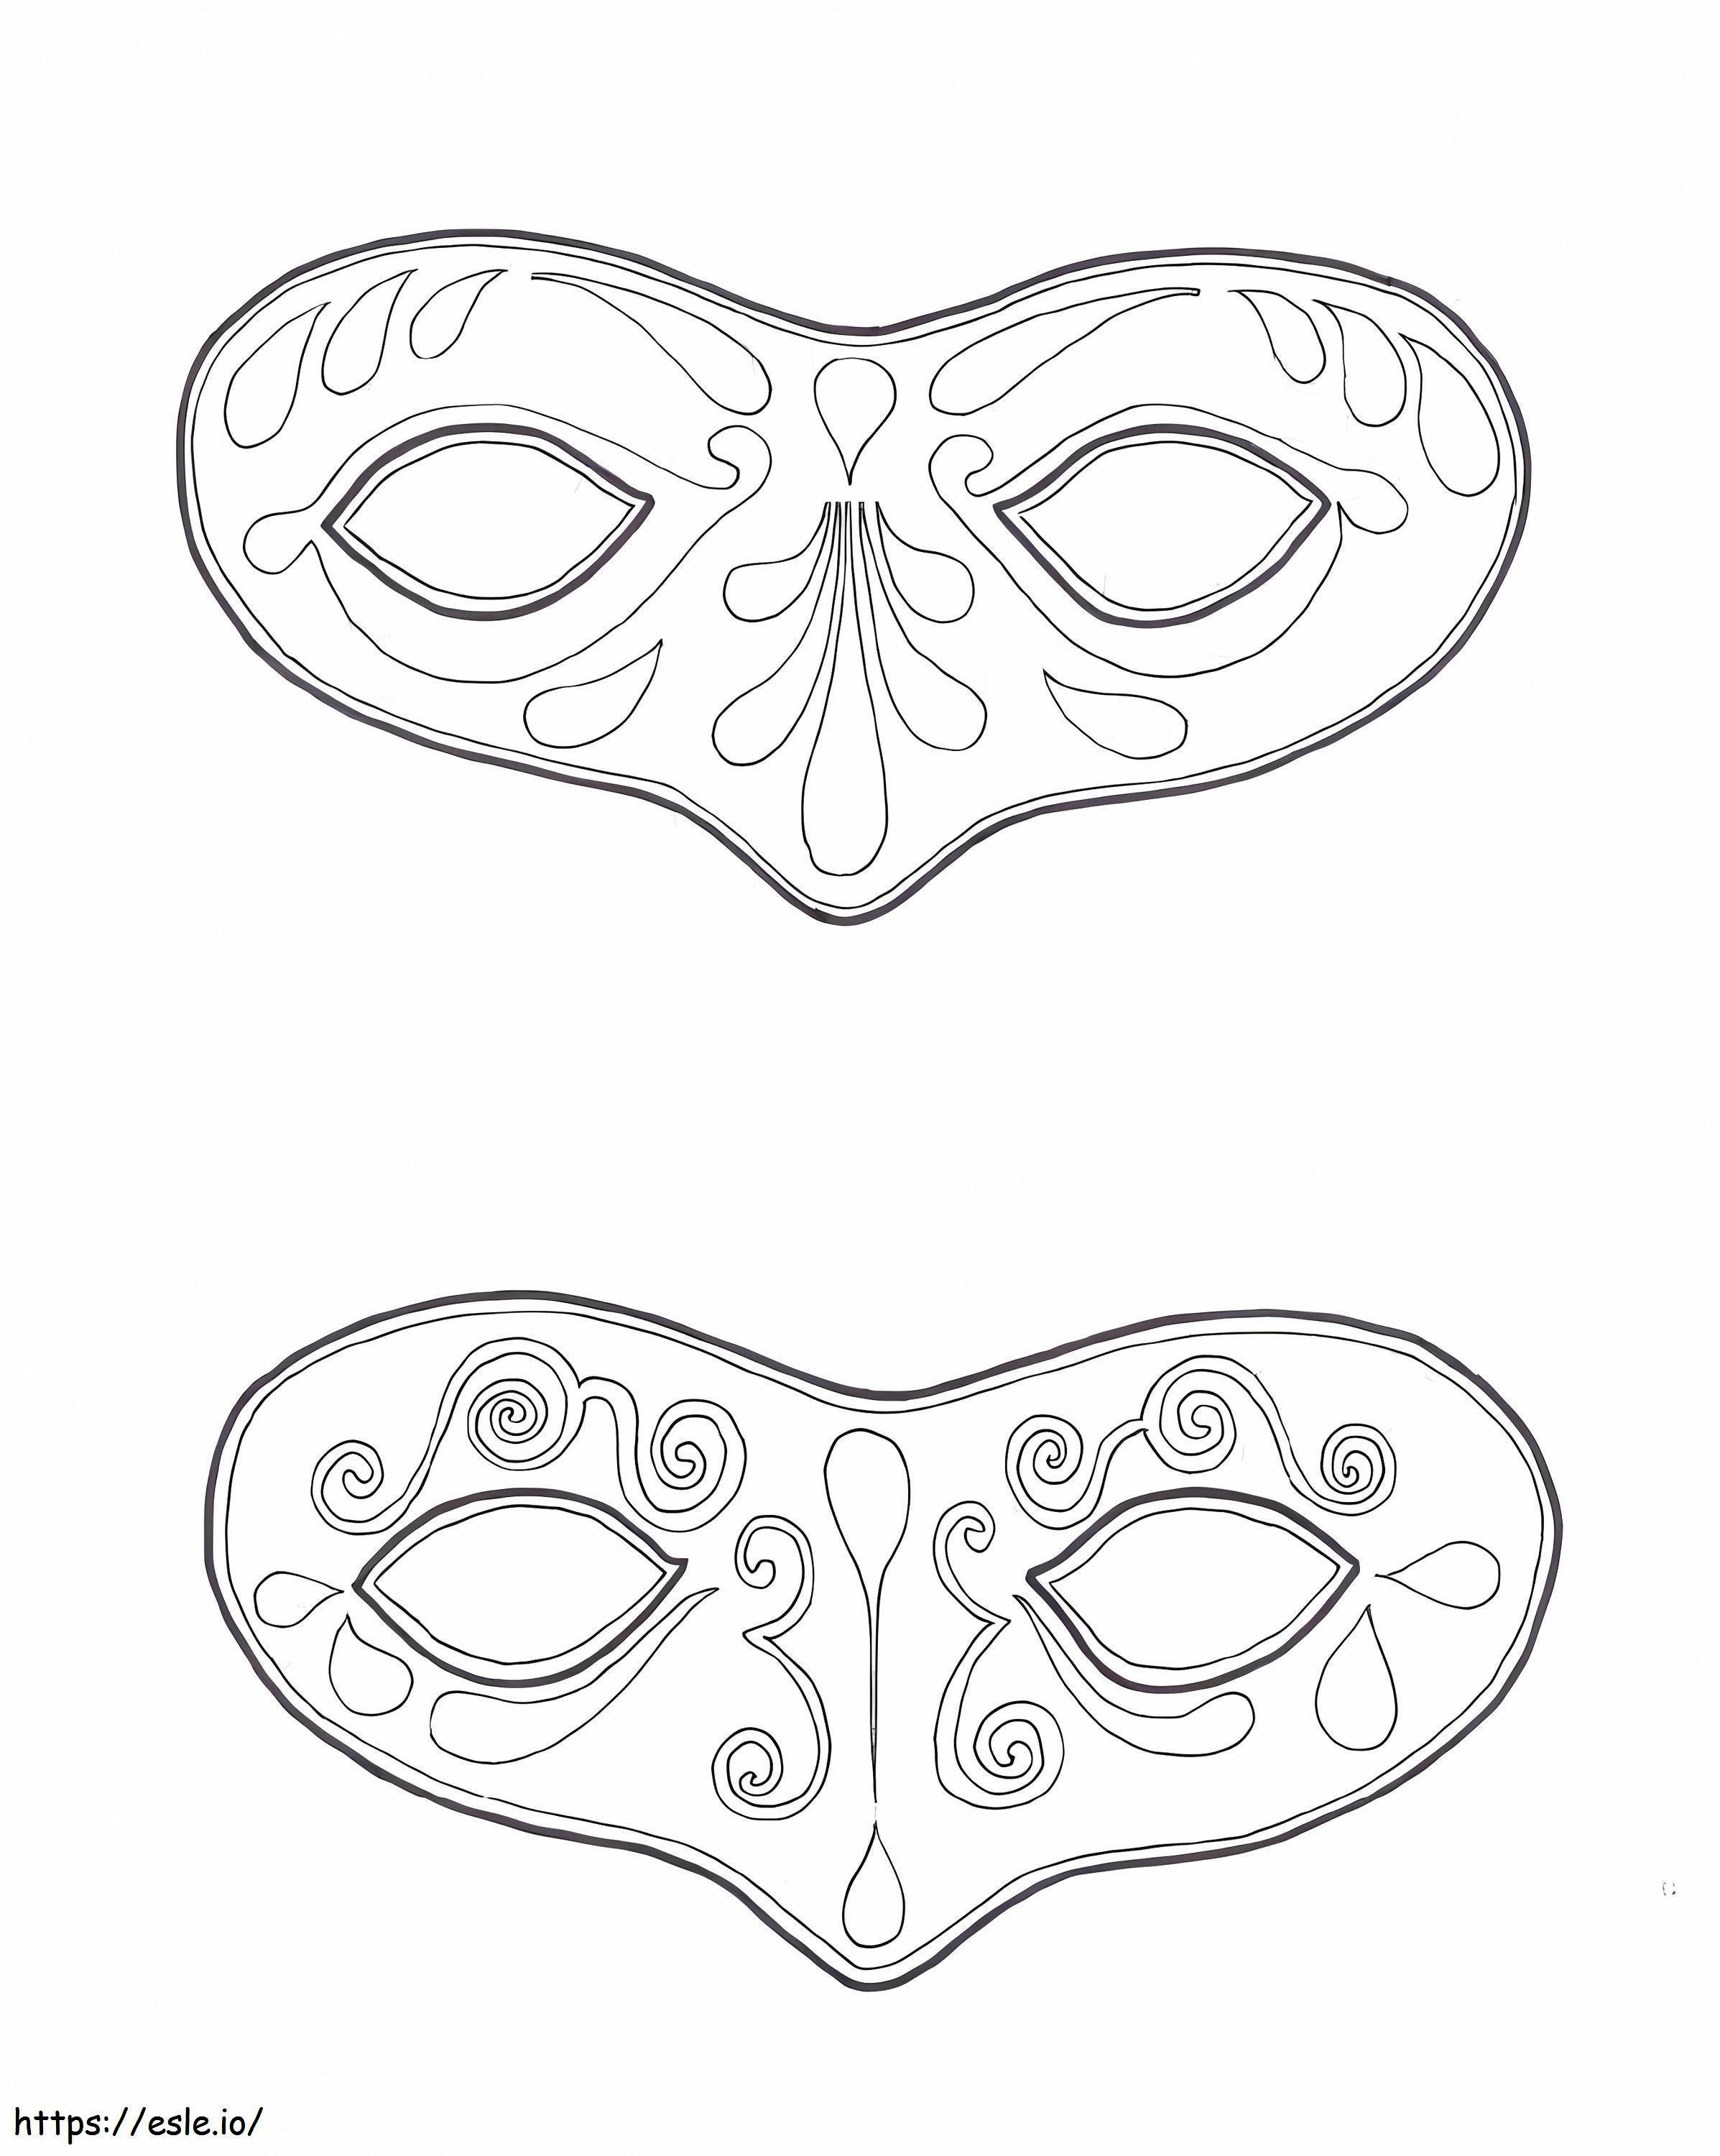 Dos Mascaras coloring page